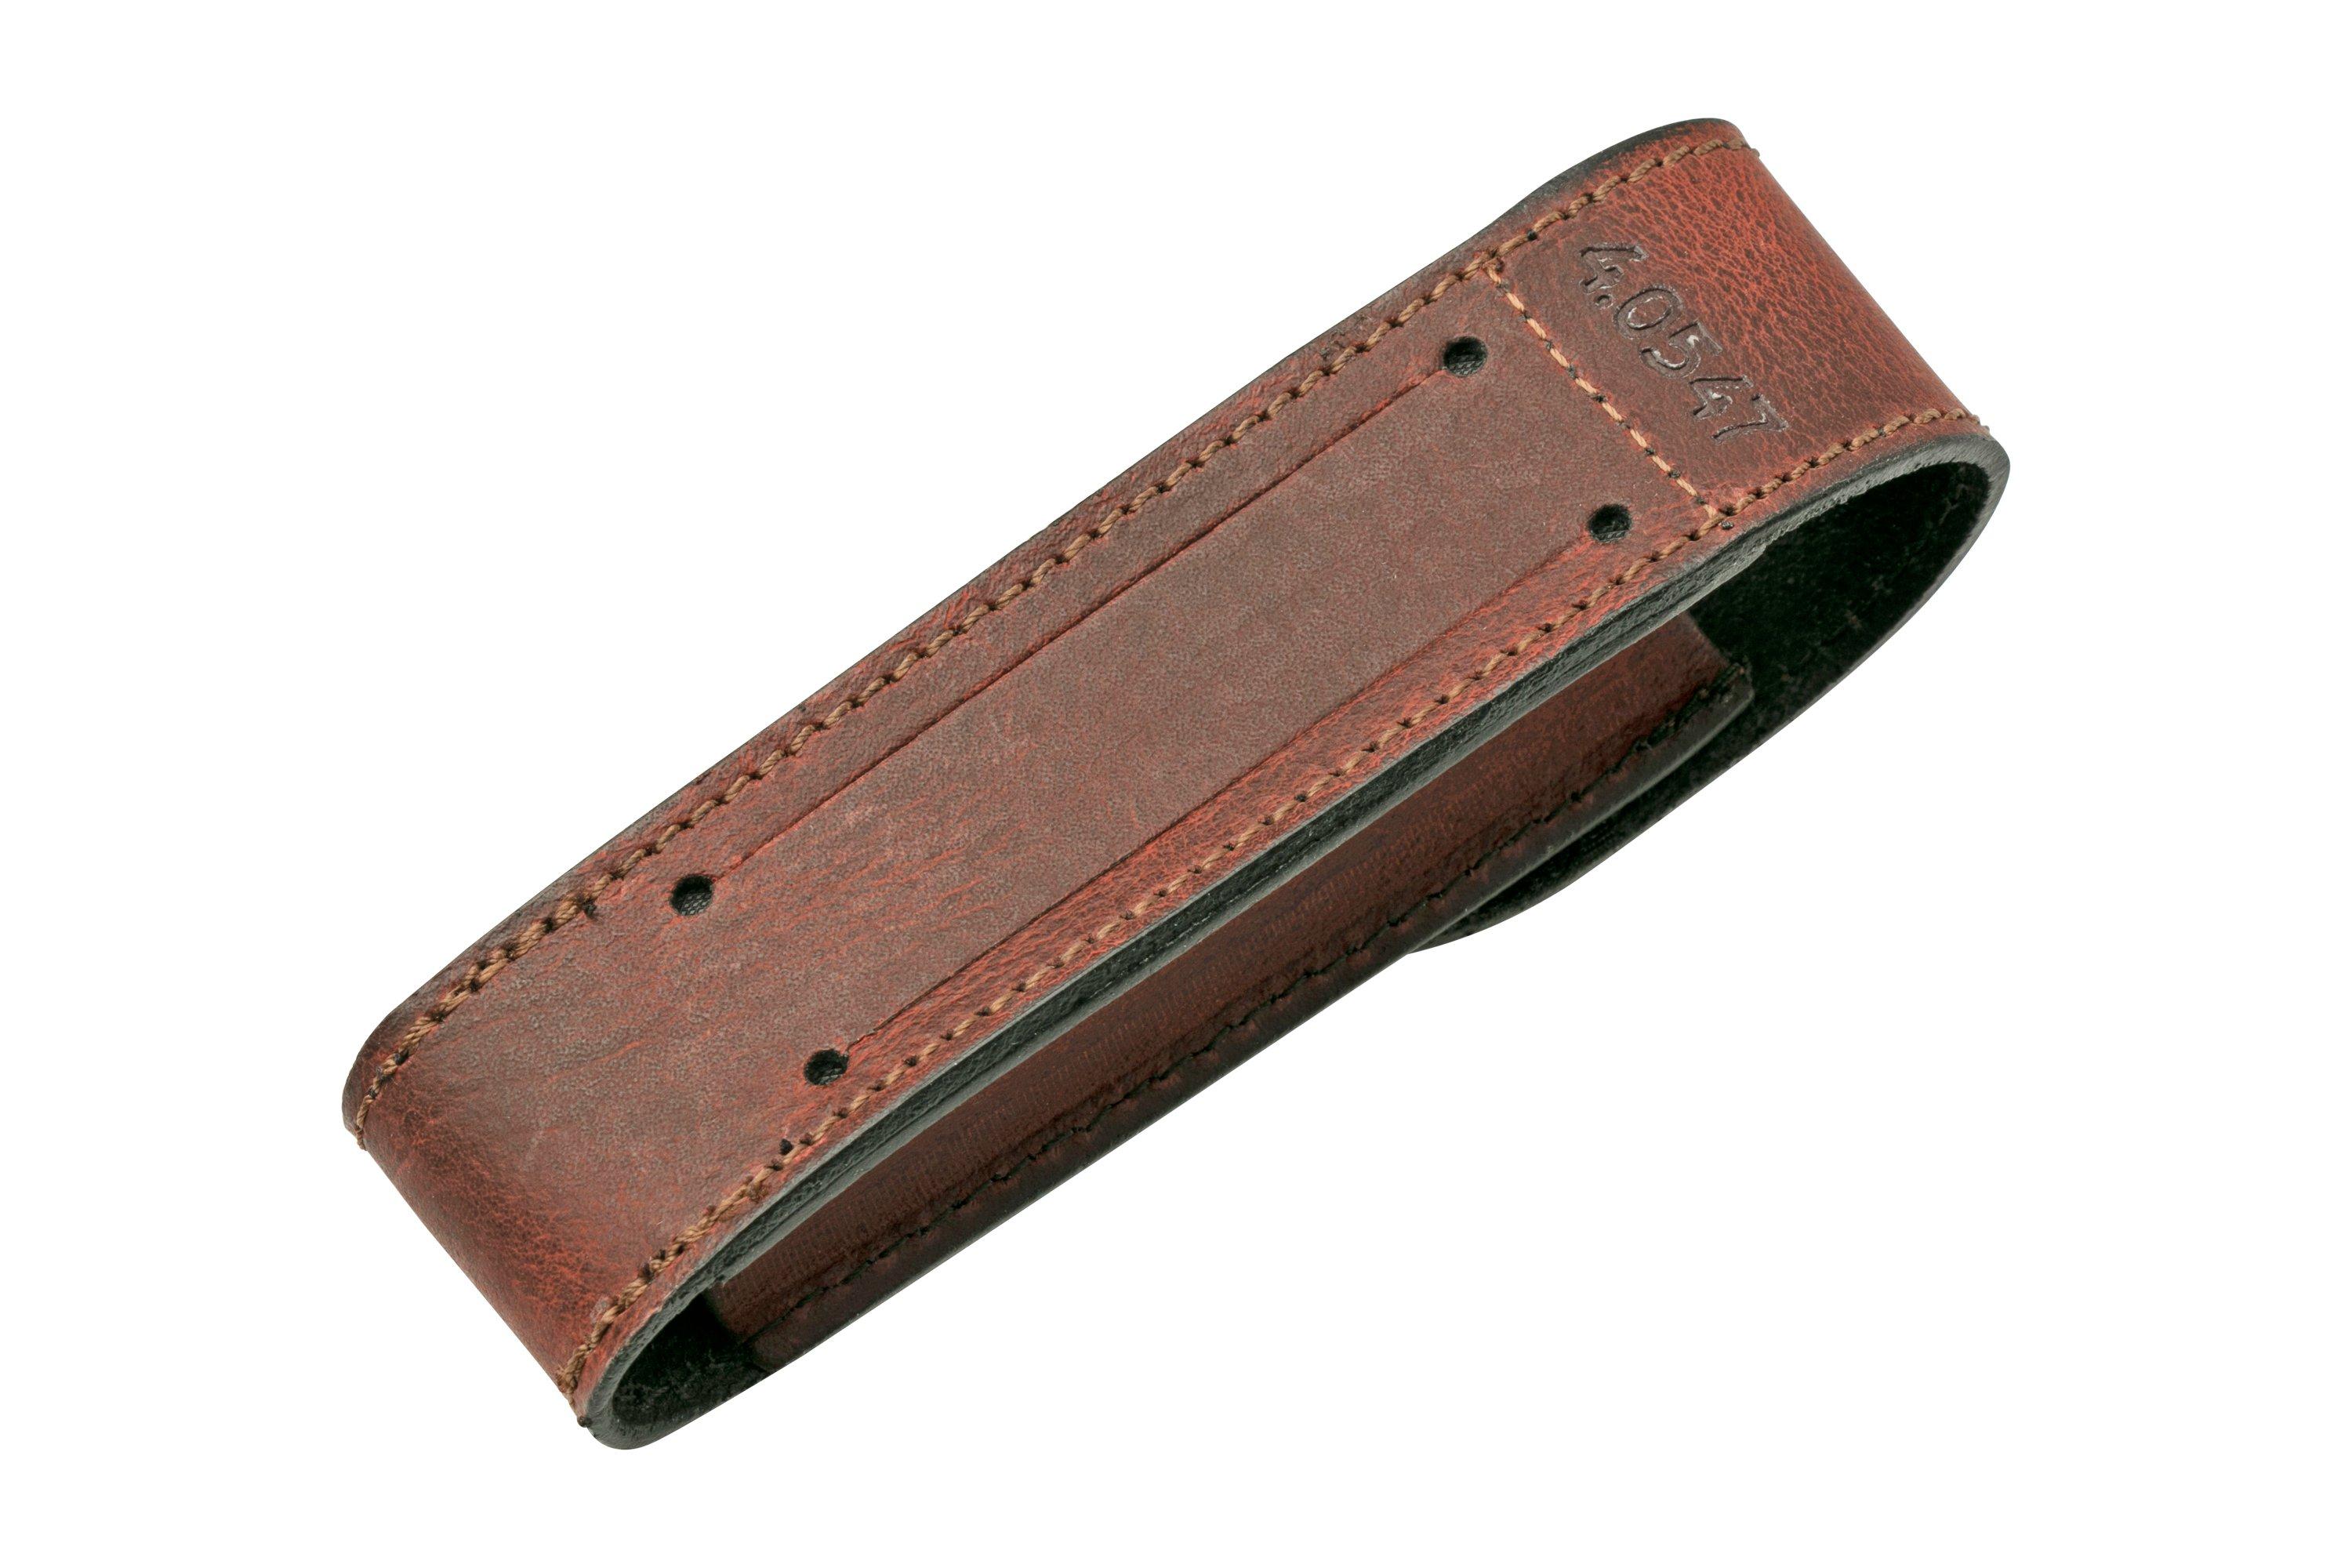 Victorinox belt pouch 4.0520.31 2-4 layers, black, pocket clip